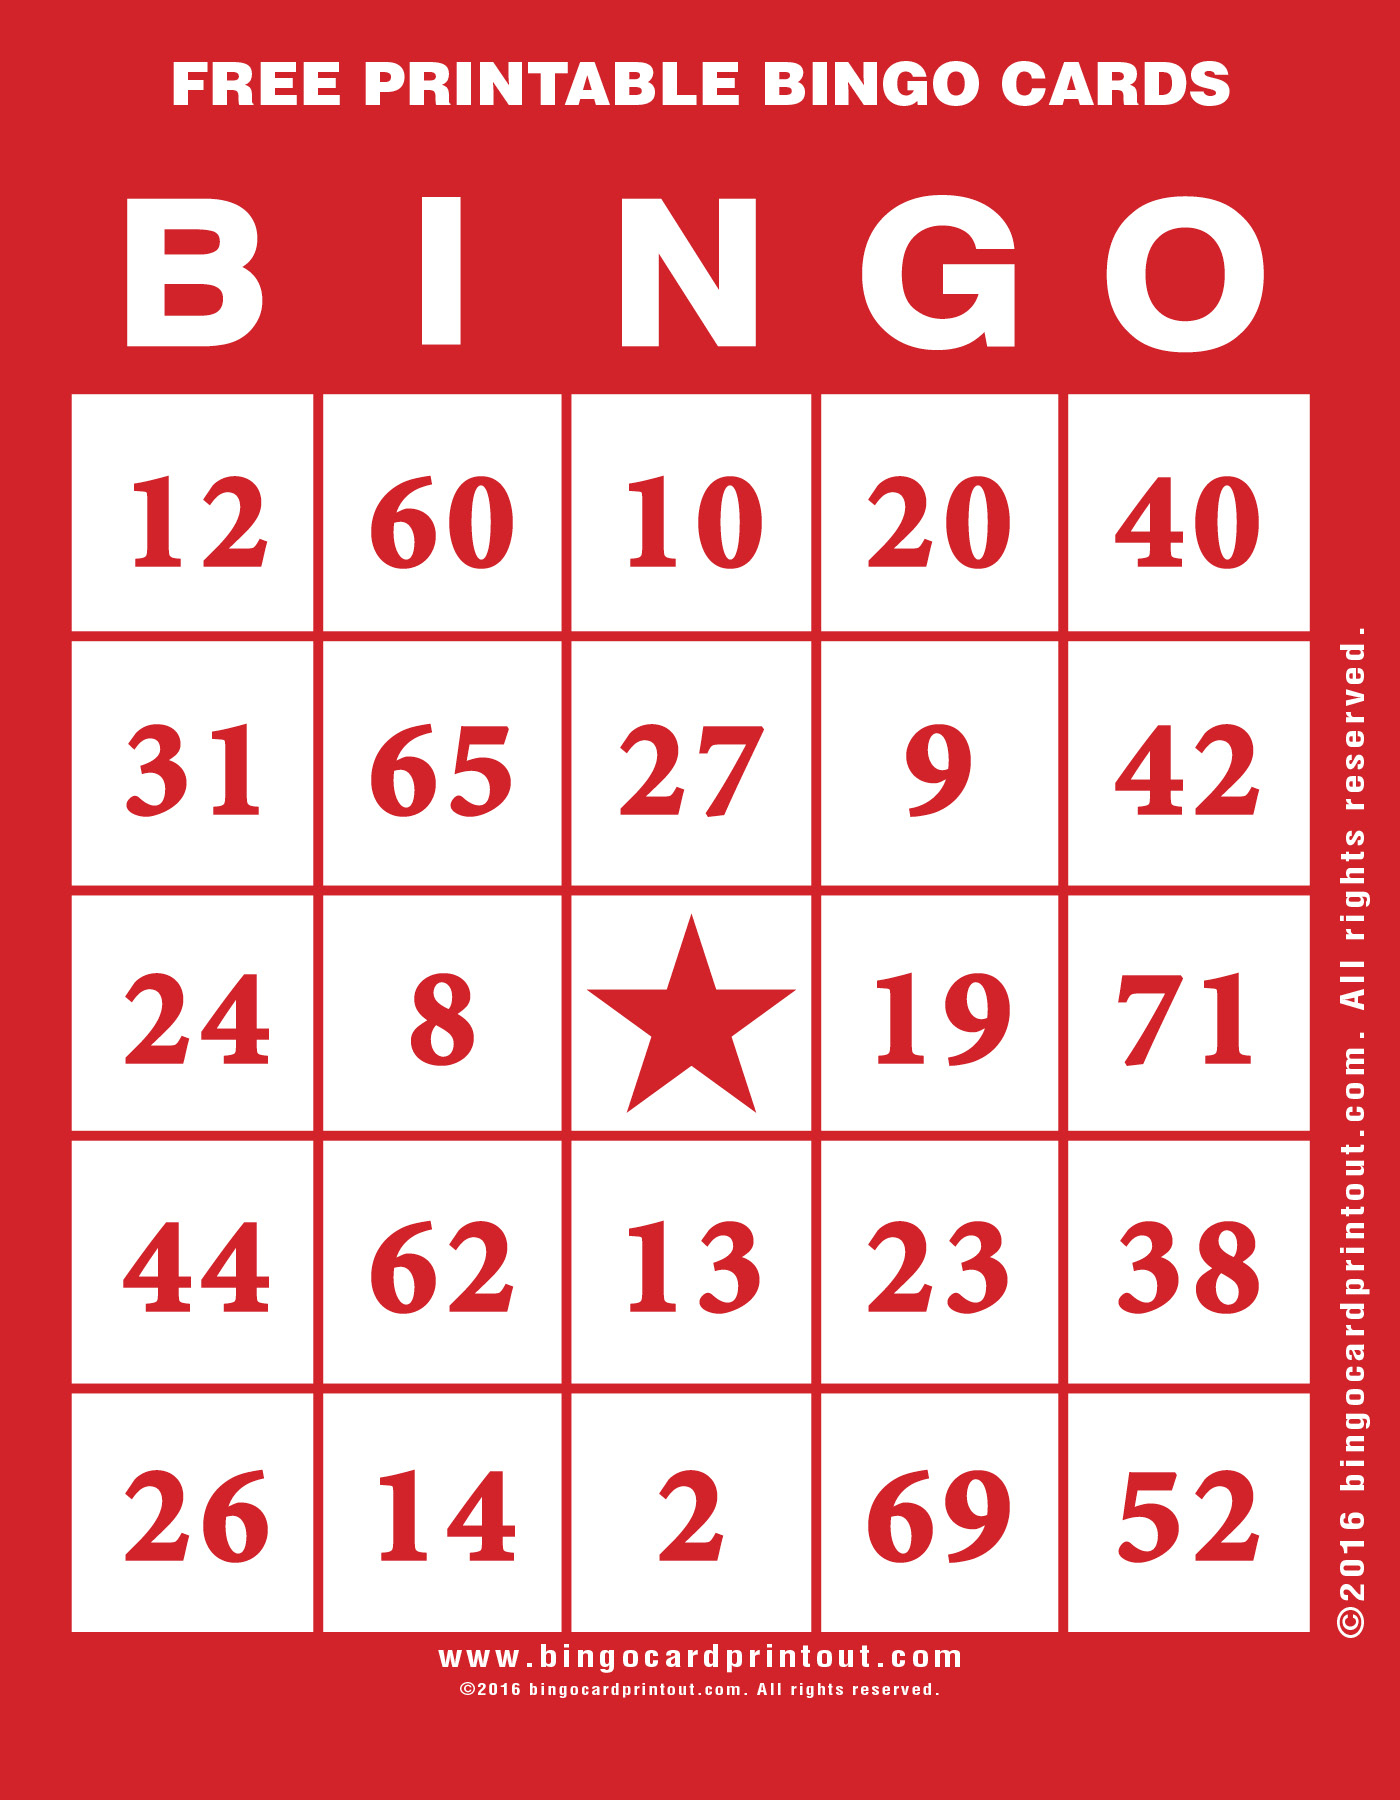 Free Printable Bingo Cards BingoCardPrintout